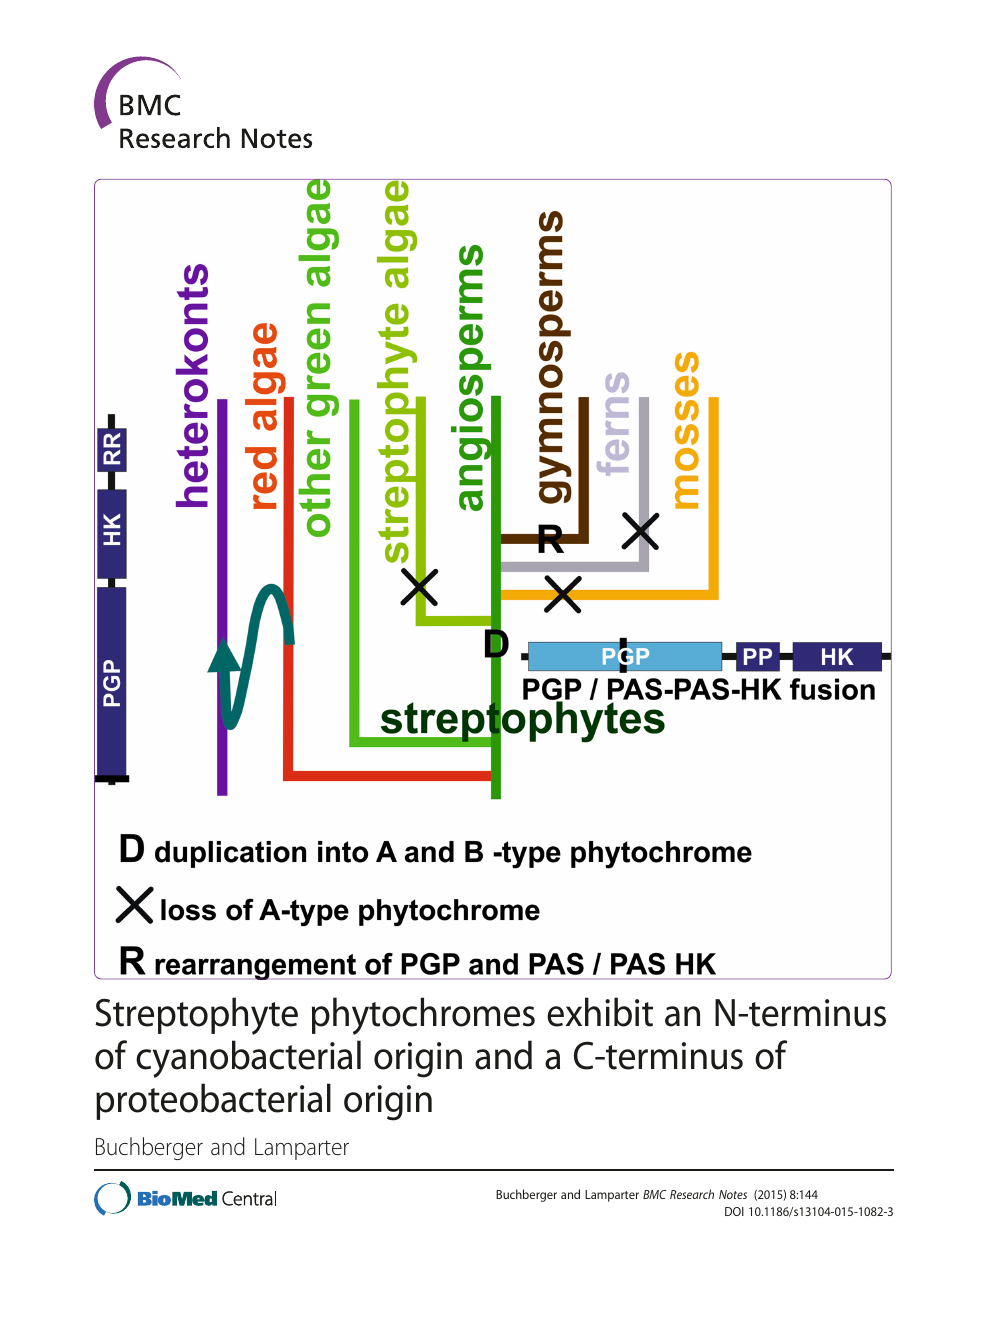 Streptophyte phytochromes exhibit an N-terminus of cyanobacterial